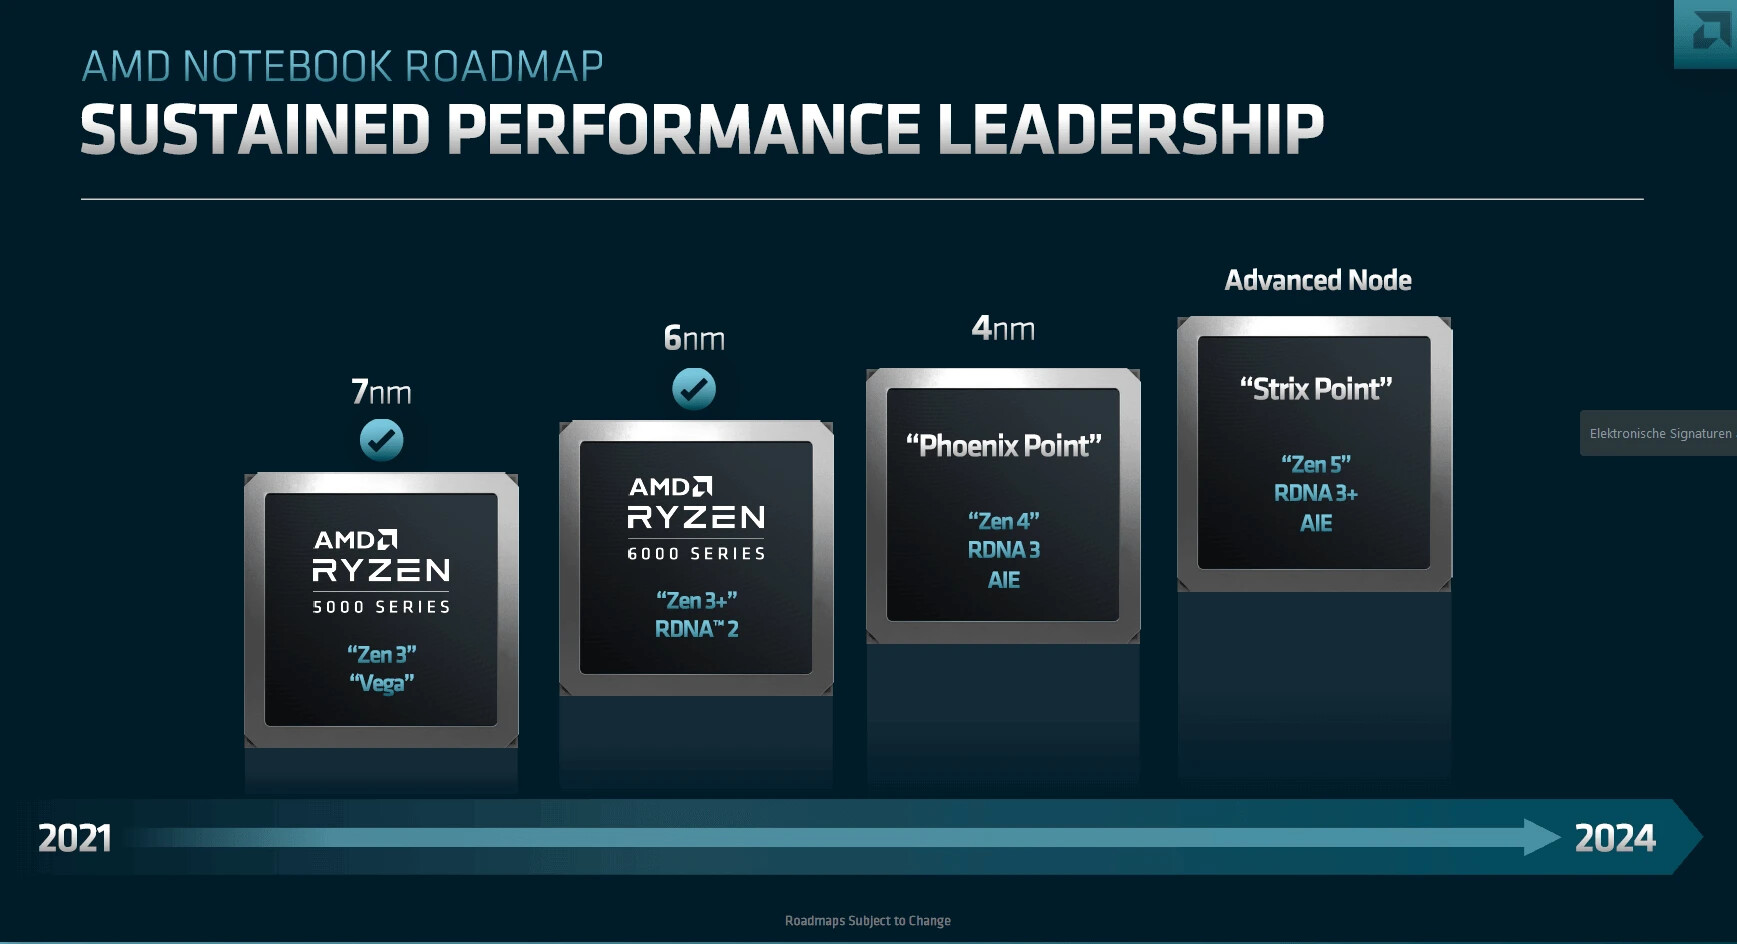 More AMD "Strix Point" Mobile Processor Details Emerge TechPowerUp